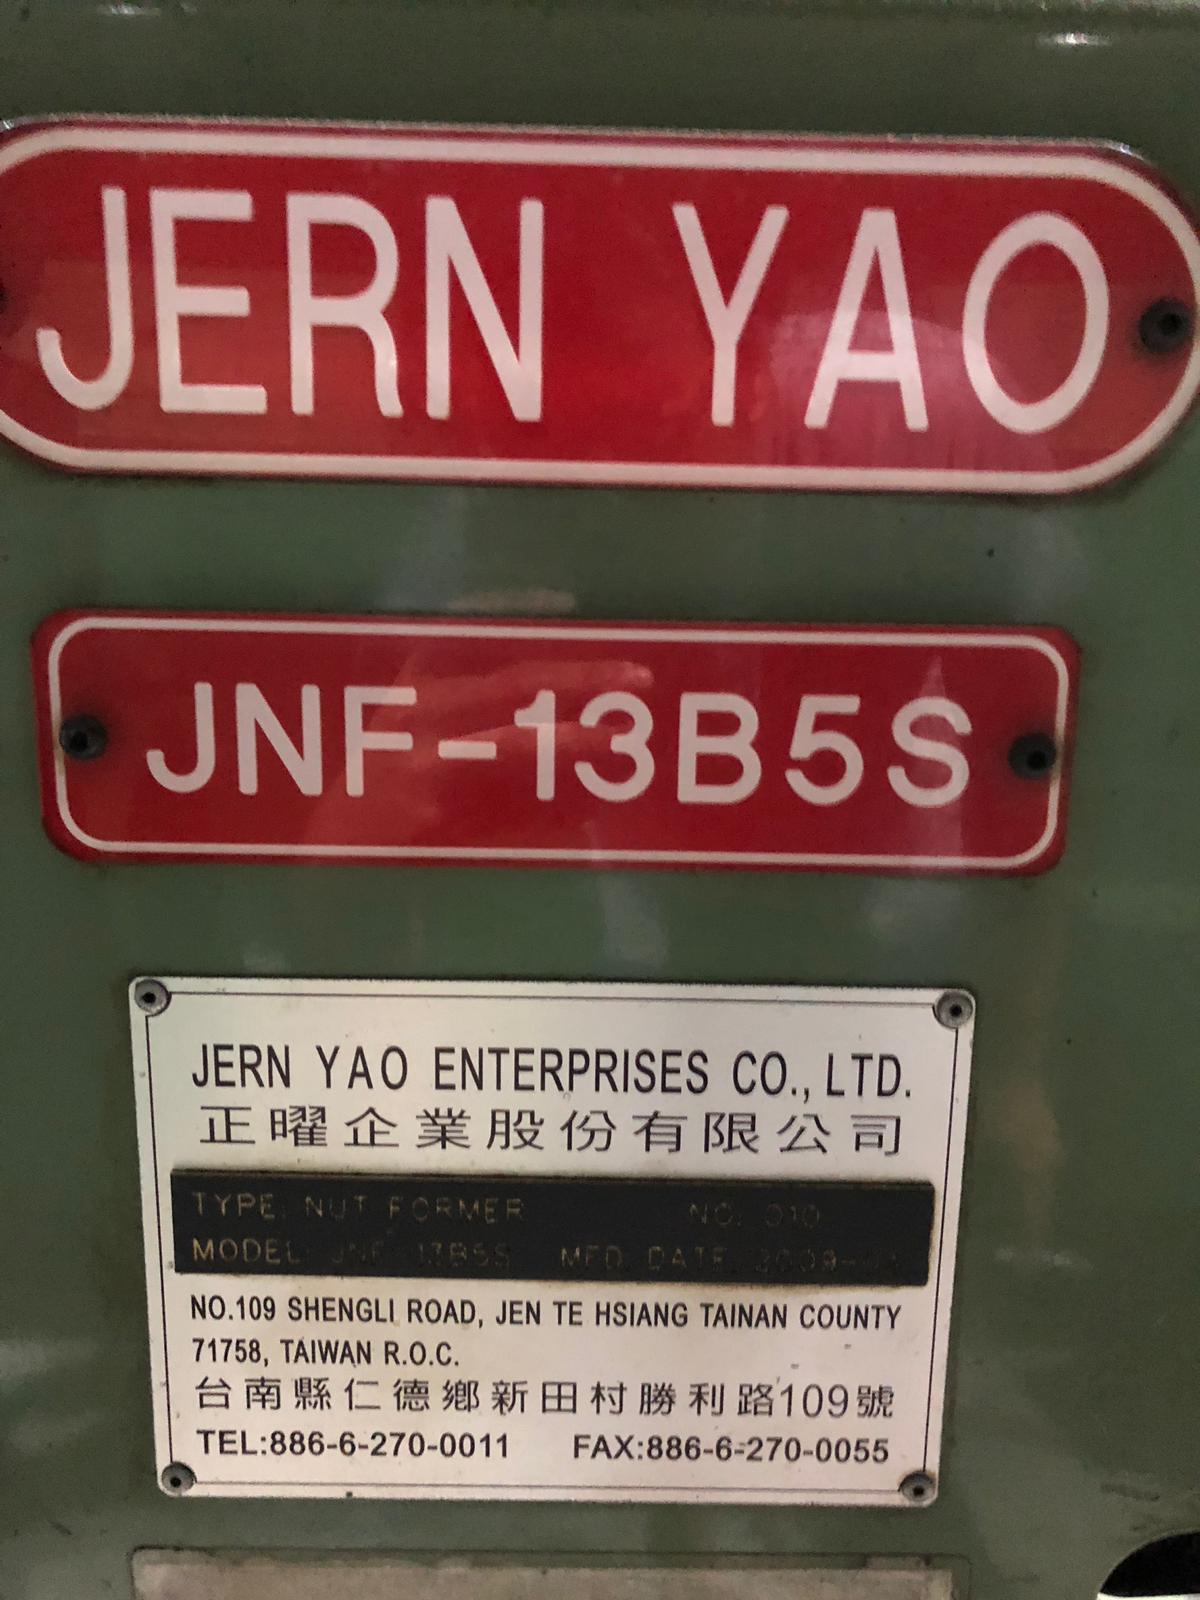 #723 Jern Yao 13B5S nut former